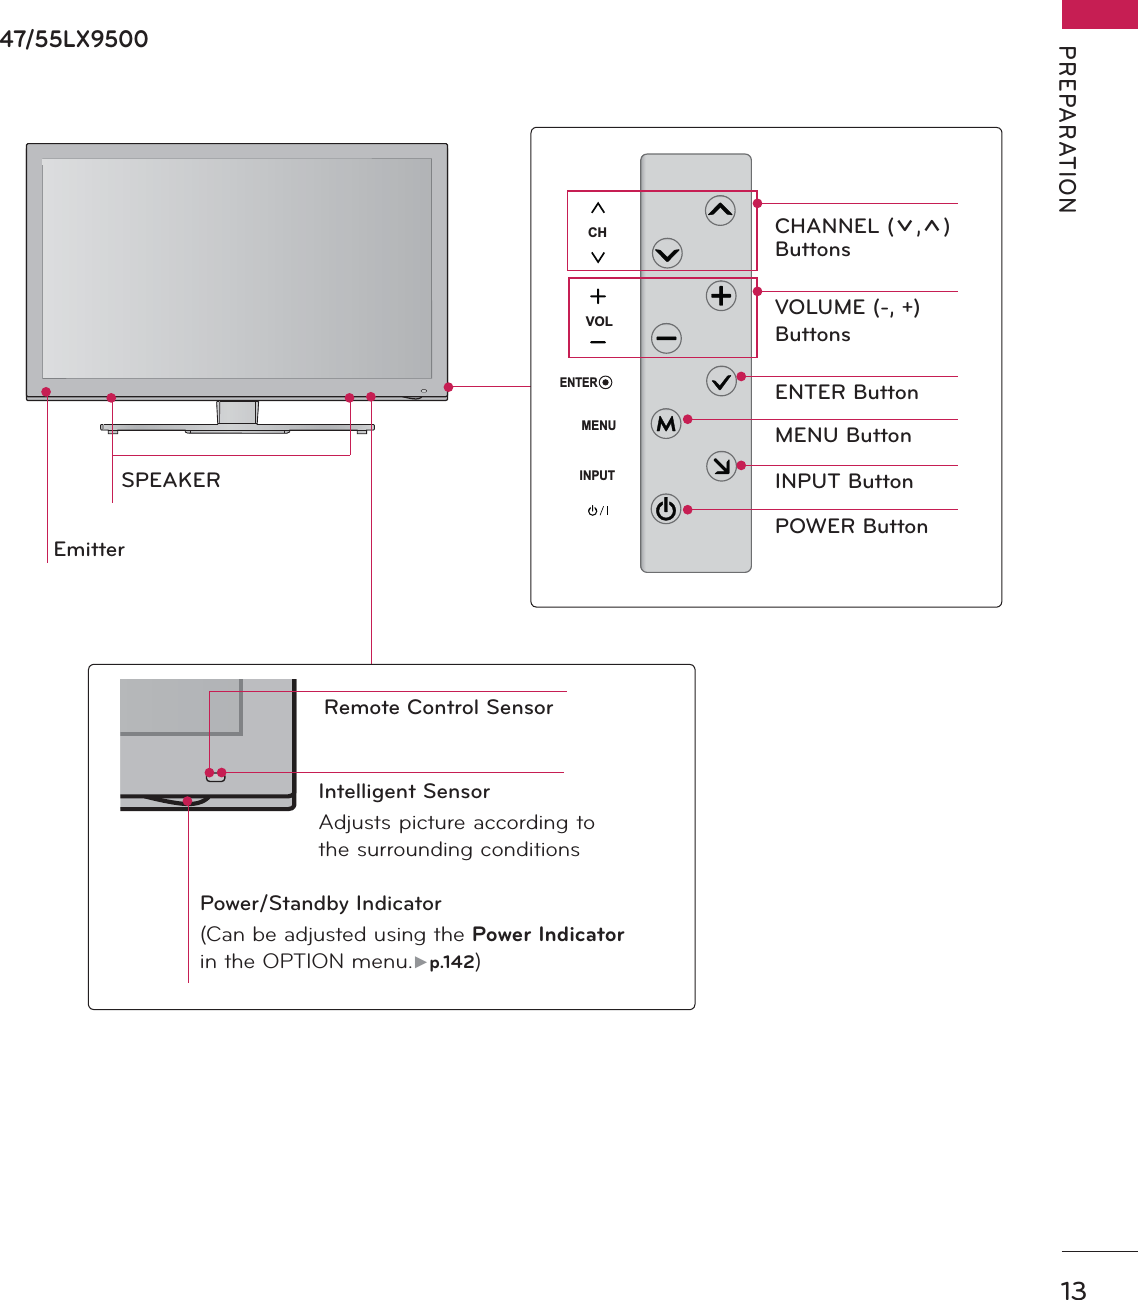 13PREPARATION47/55LX9500SPEAKEREmitterRemote Control SensorIntelligent SensorAdjusts picture according to the surrounding conditions CHVOLENTERINPUTMENUCHANNEL (ᰝ,ᰜ) ButtonsVOLUME (-, +) ButtonsENTER ButtonINPUT ButtonMENU ButtonPOWER ButtonPower/Standby Indicator(Can be adjusted using the Power Indicator in the OPTION menu.Źp.142)